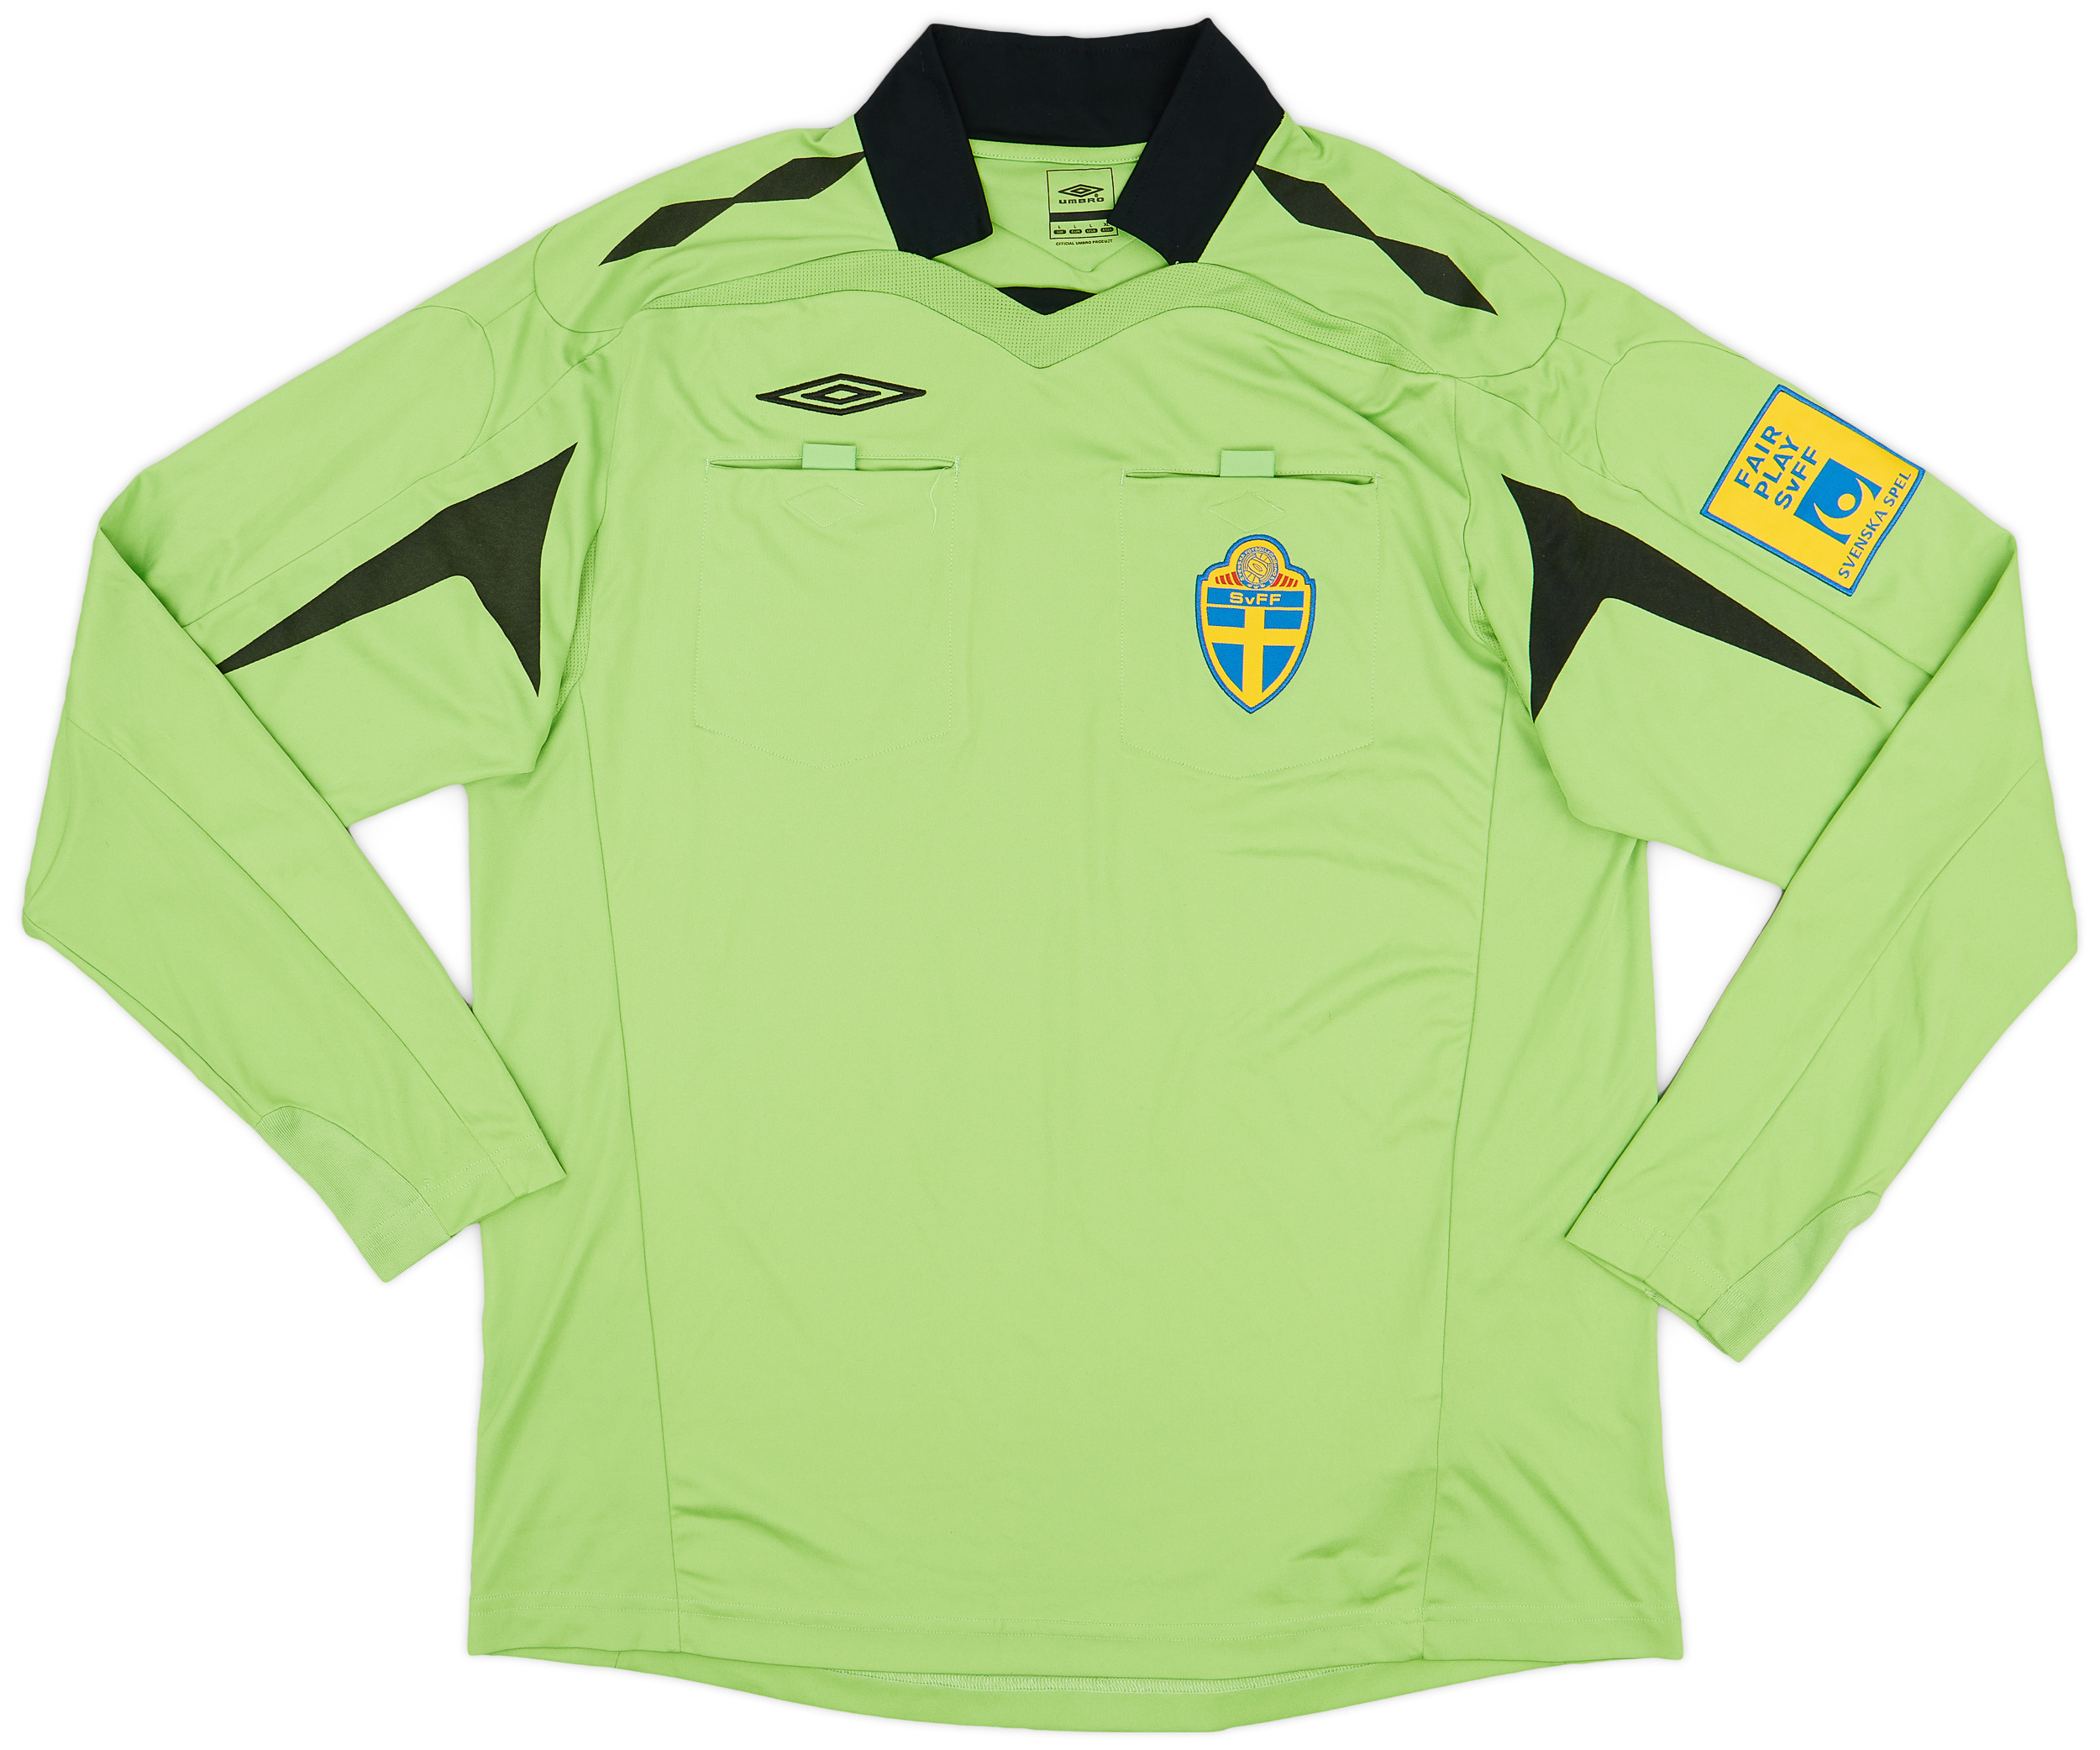 2000s Sweden Umbro Referee Shirt - 9/10 - ()